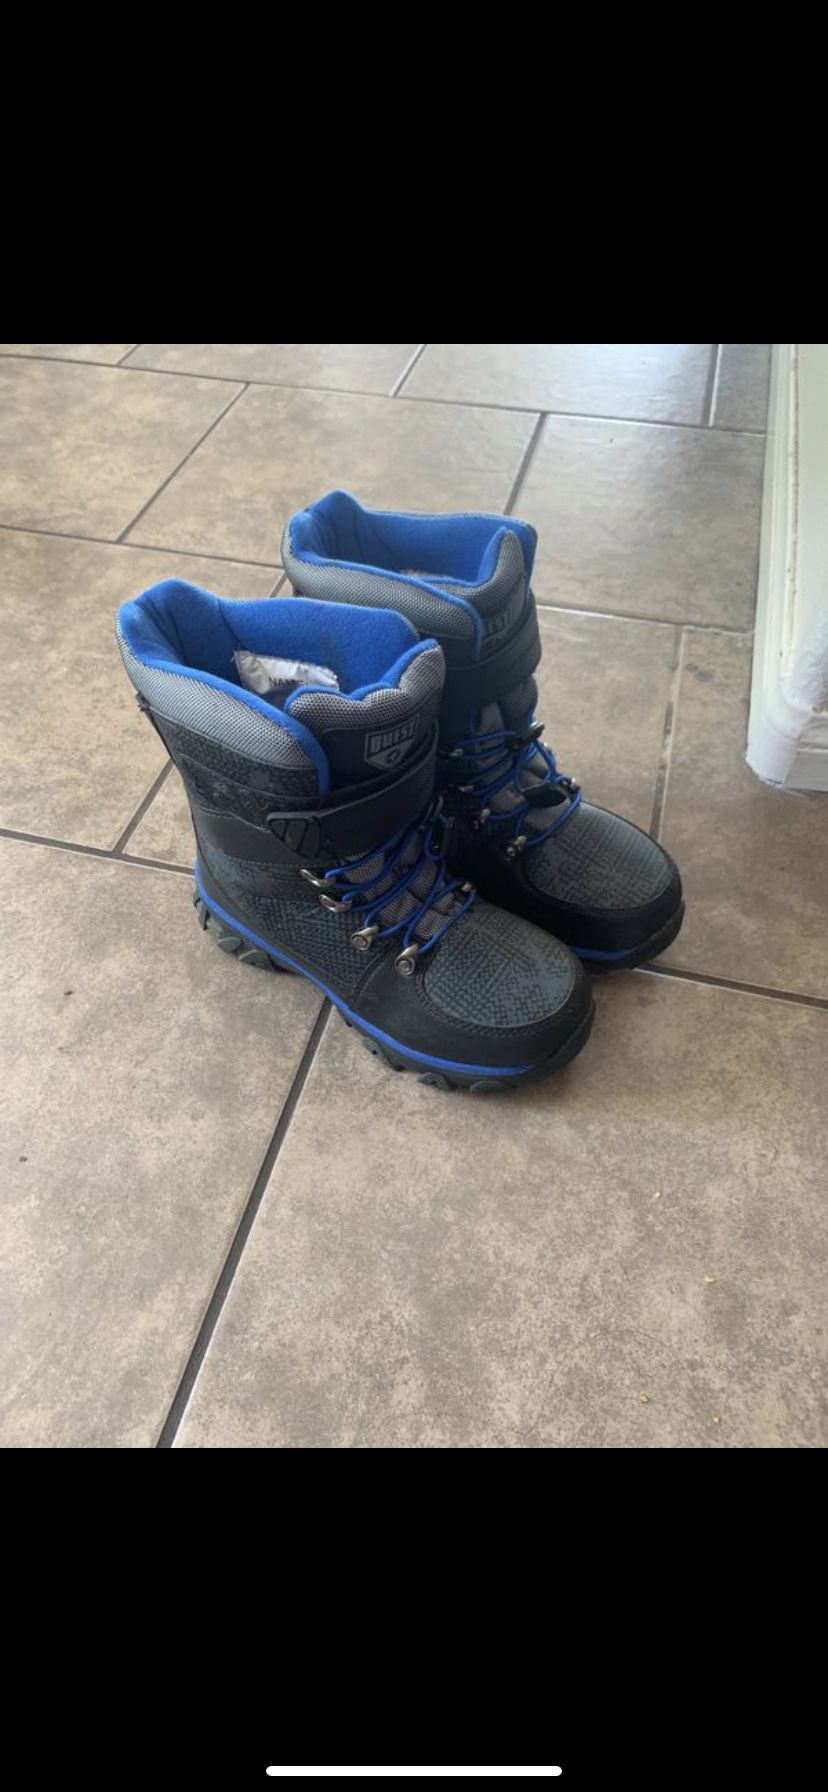 Boys snow boots size 4